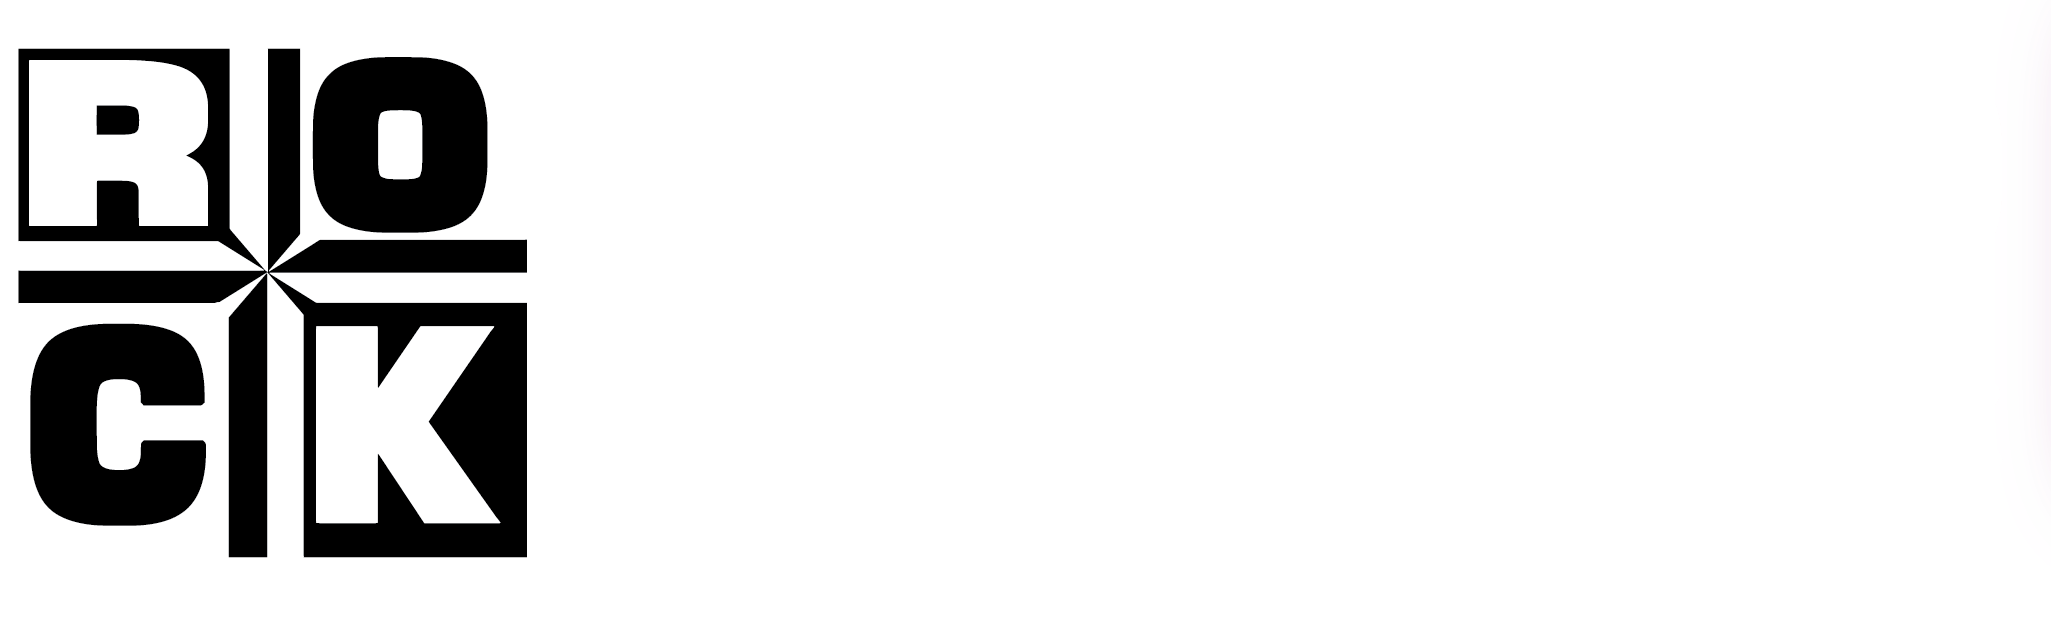 rock maestro logo